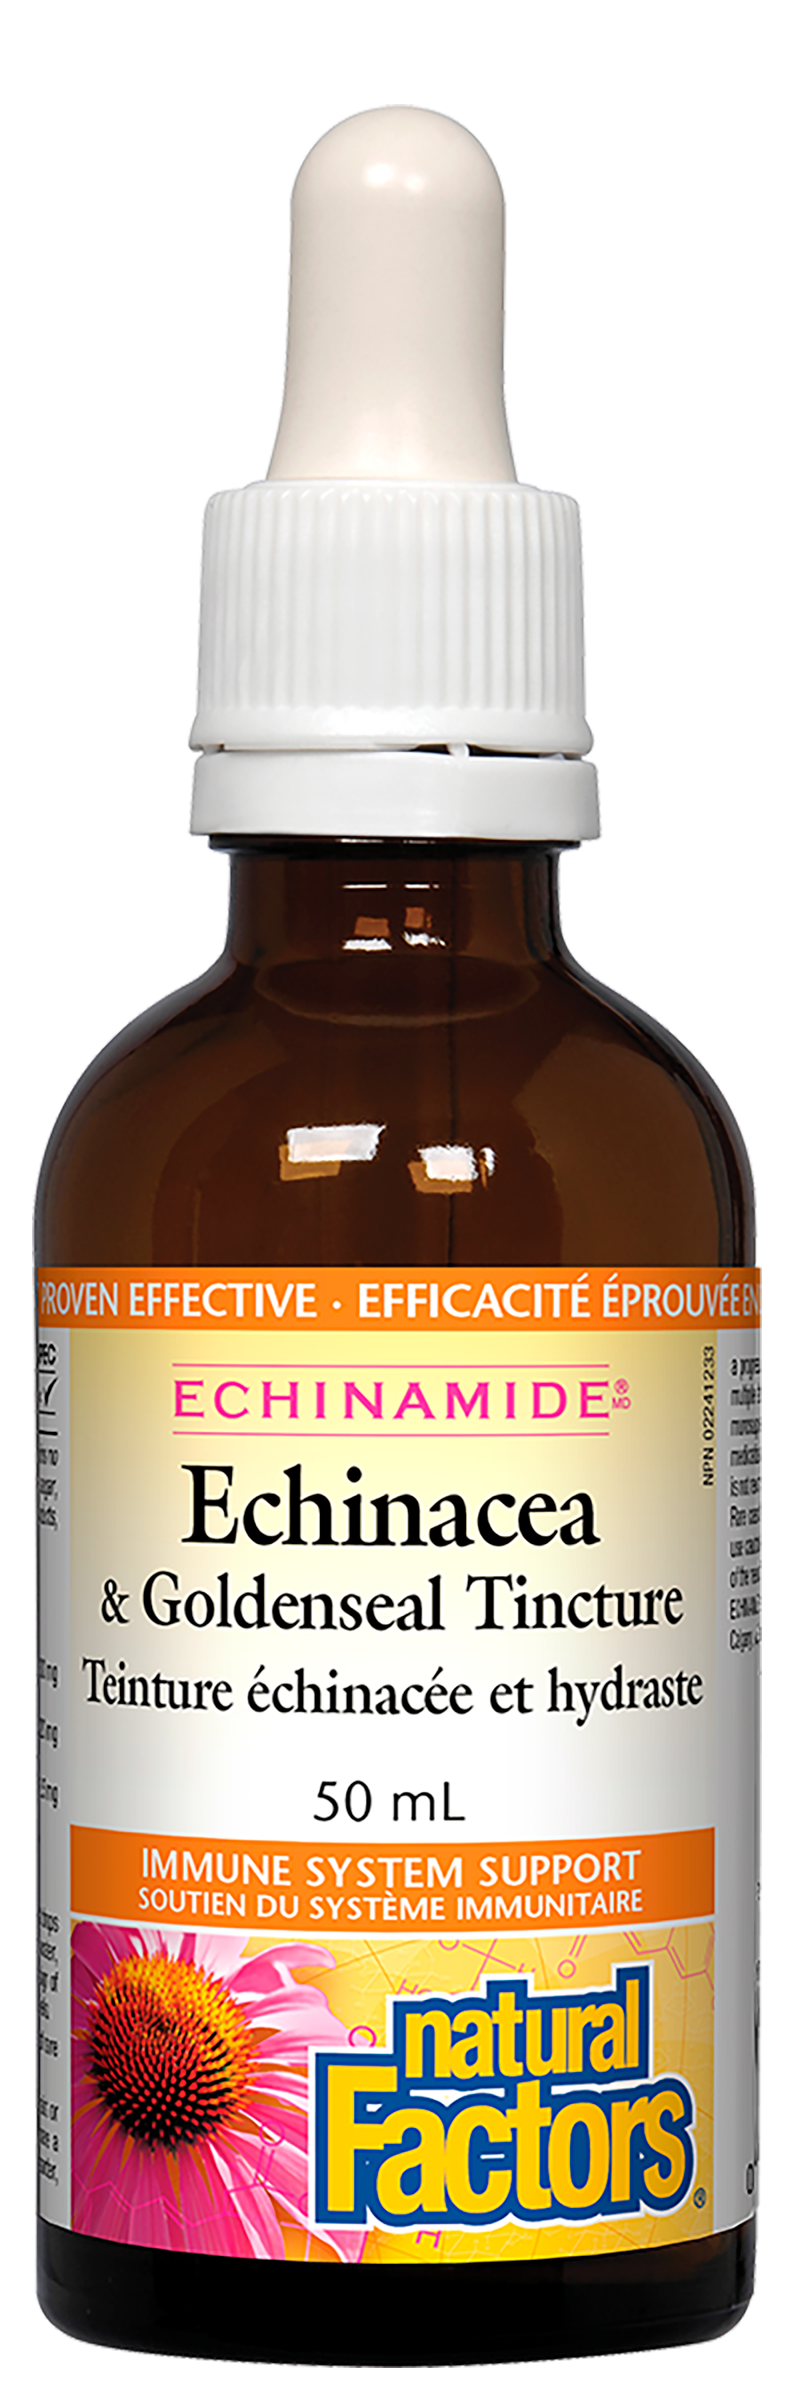 Natural Factors Echinacea & Goldenseal Tincture, ECHINAMIDE 50 ml Liquid